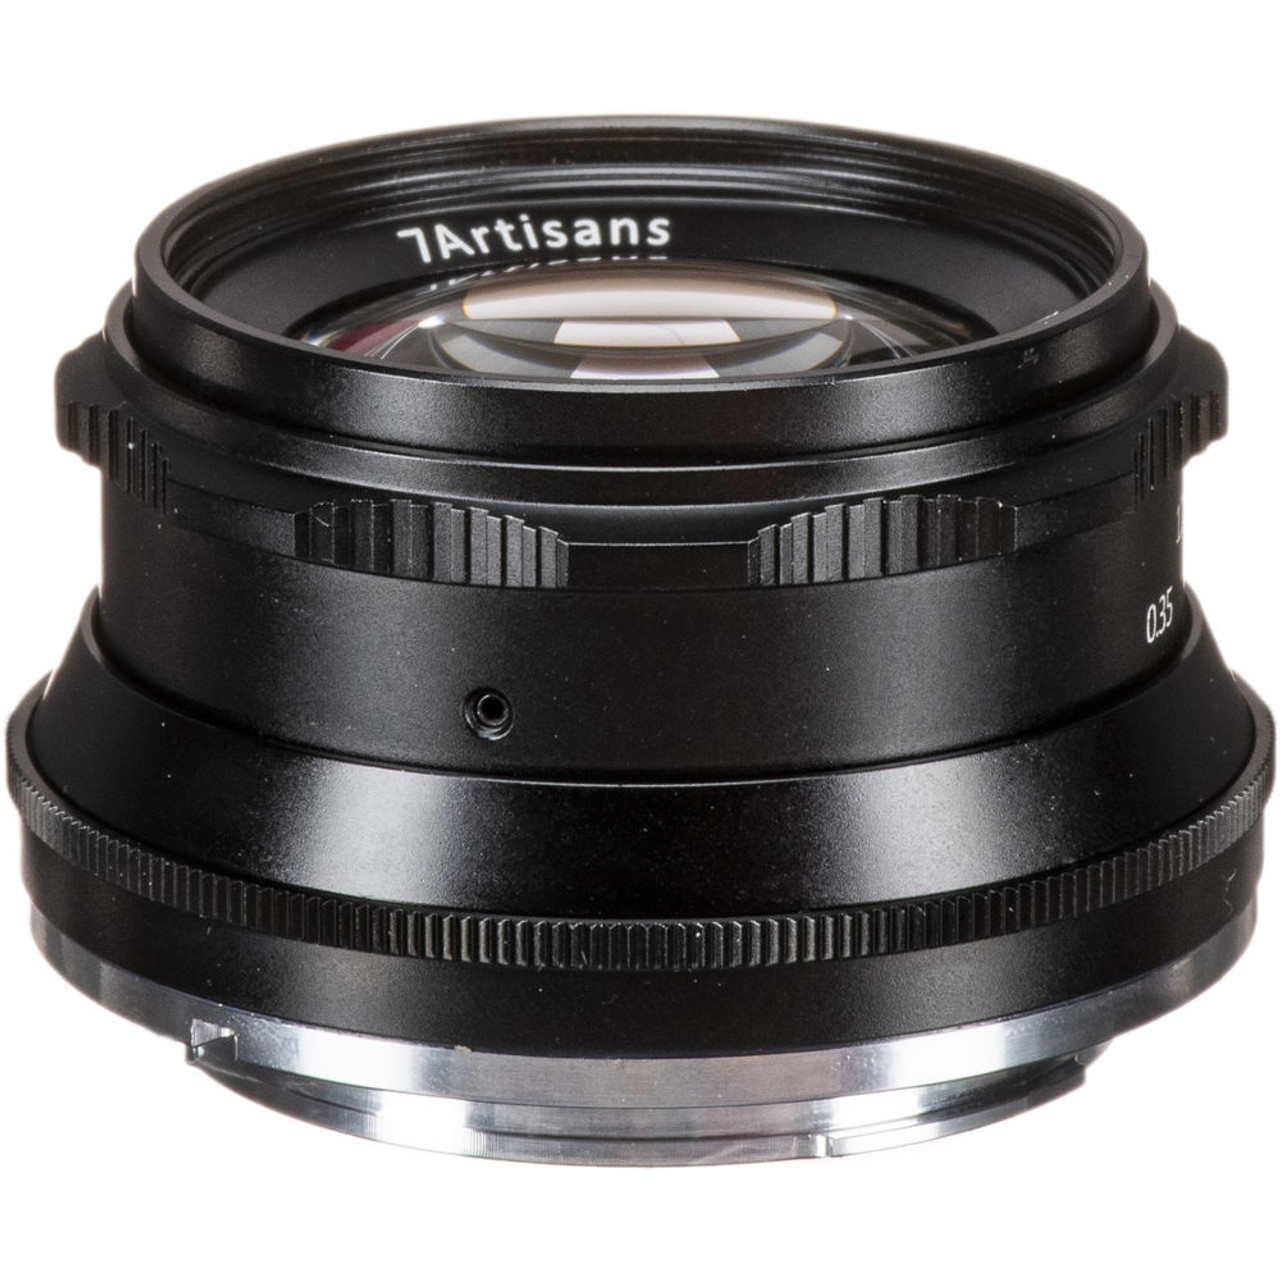 七工匠7artisans 35mm f/1.2 Canon EOS M Mount 鏡頭